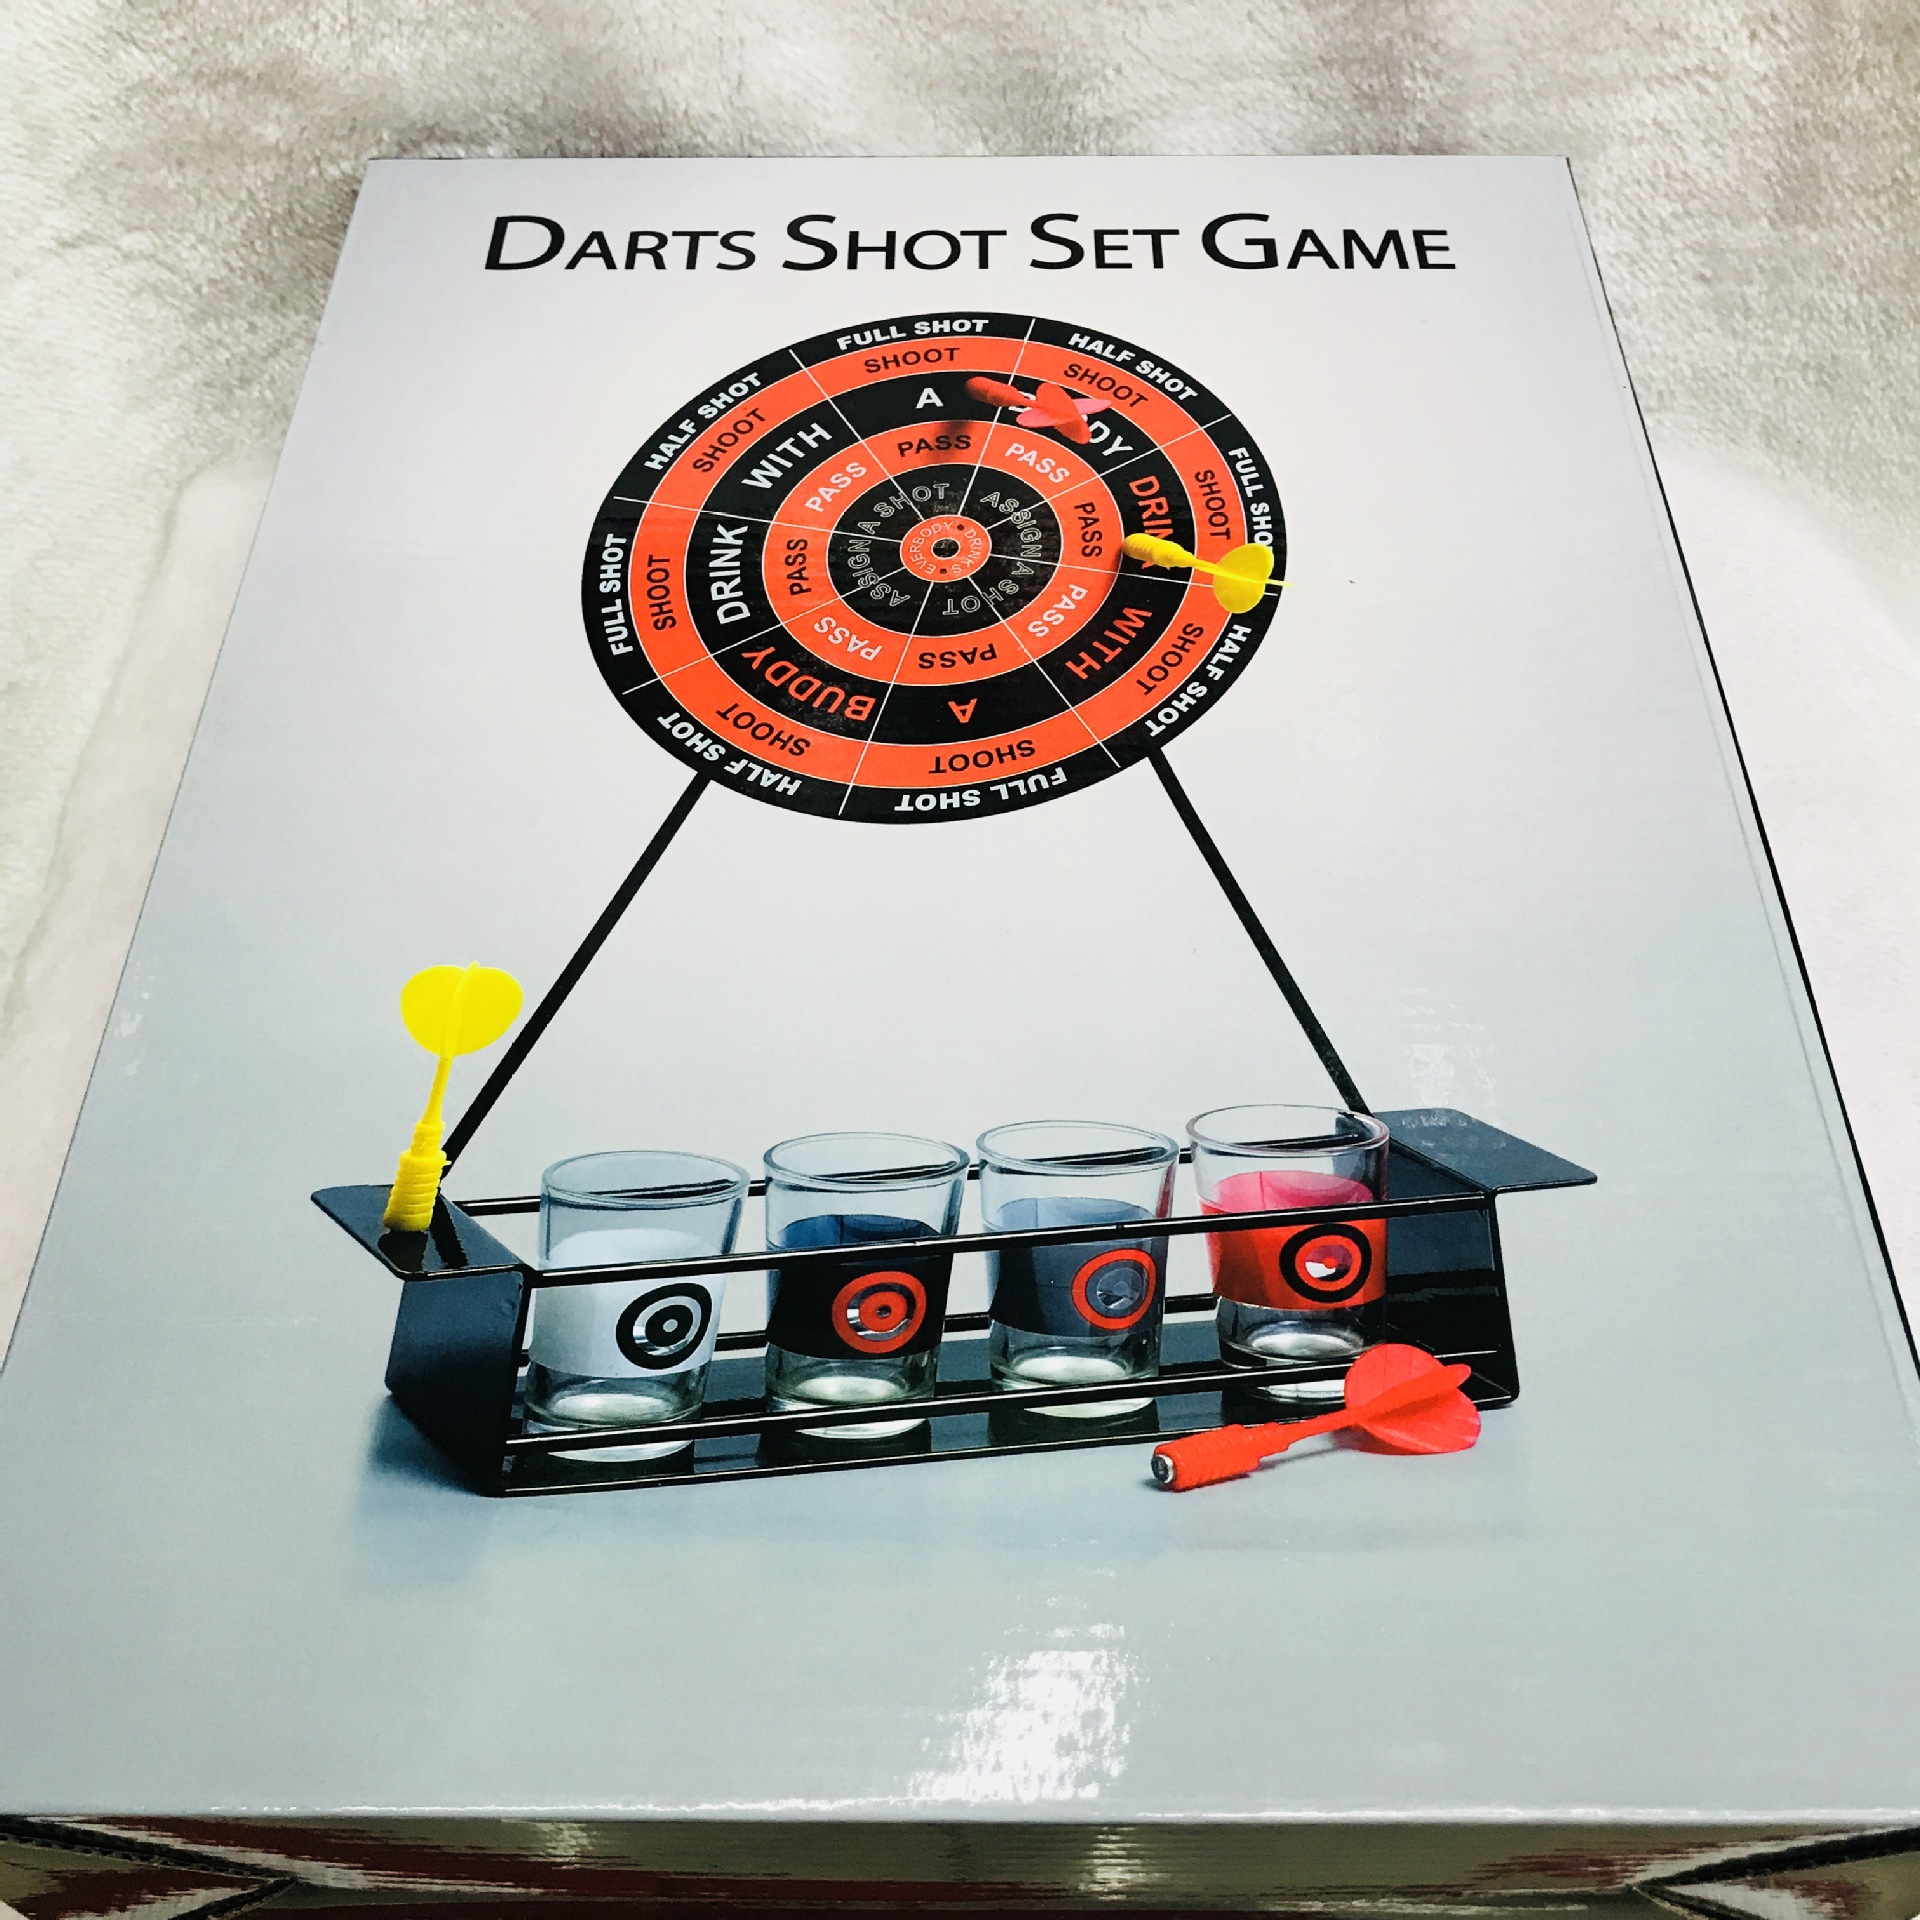 DARTS SHOT SET GAME 迷你桌面铁架磁性飞镖酒杯游戏 酒吧聚会详情图2